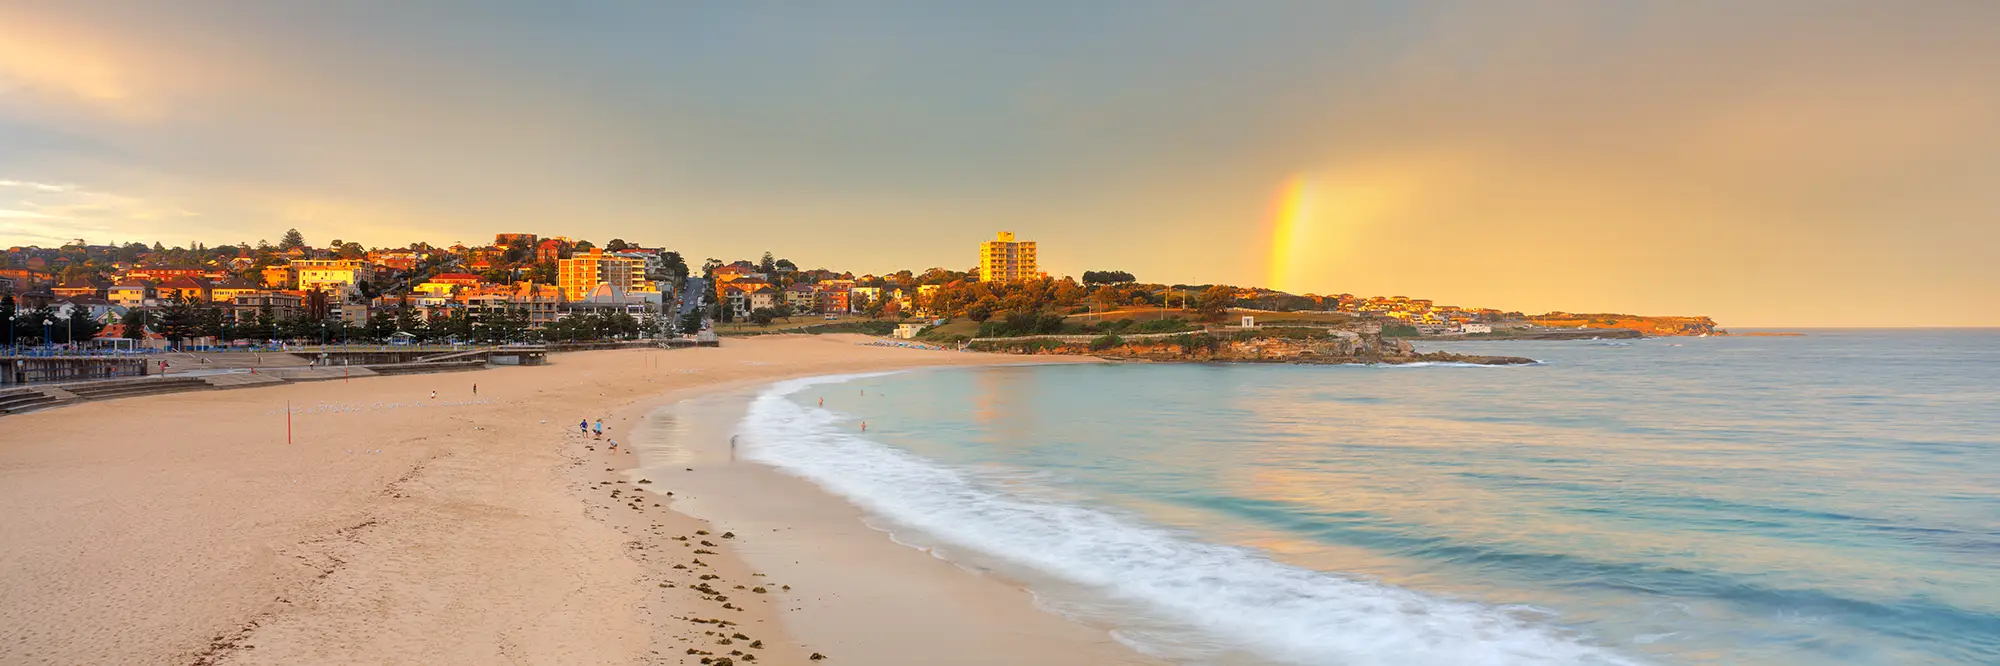 Coogee Beach Afternoon Rainbow Framed Landscape Photos